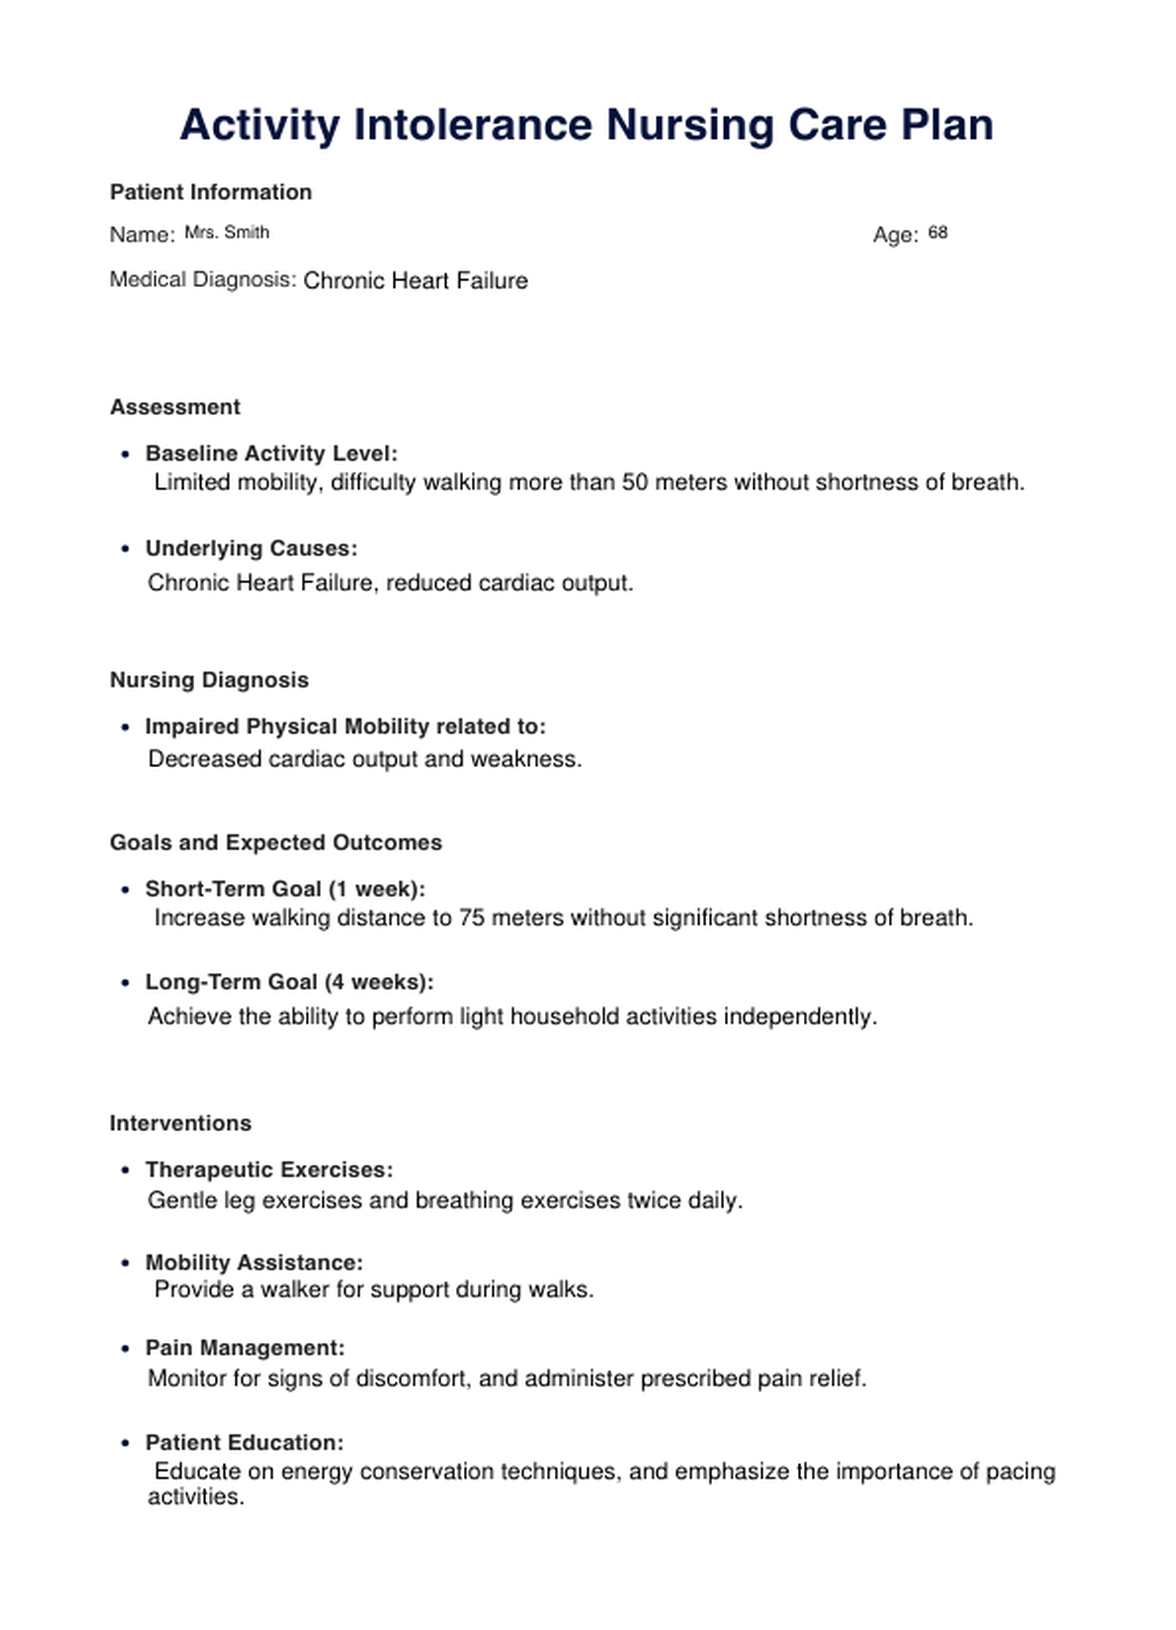 Activity Intolerance Nursing Care Plan PDF Example